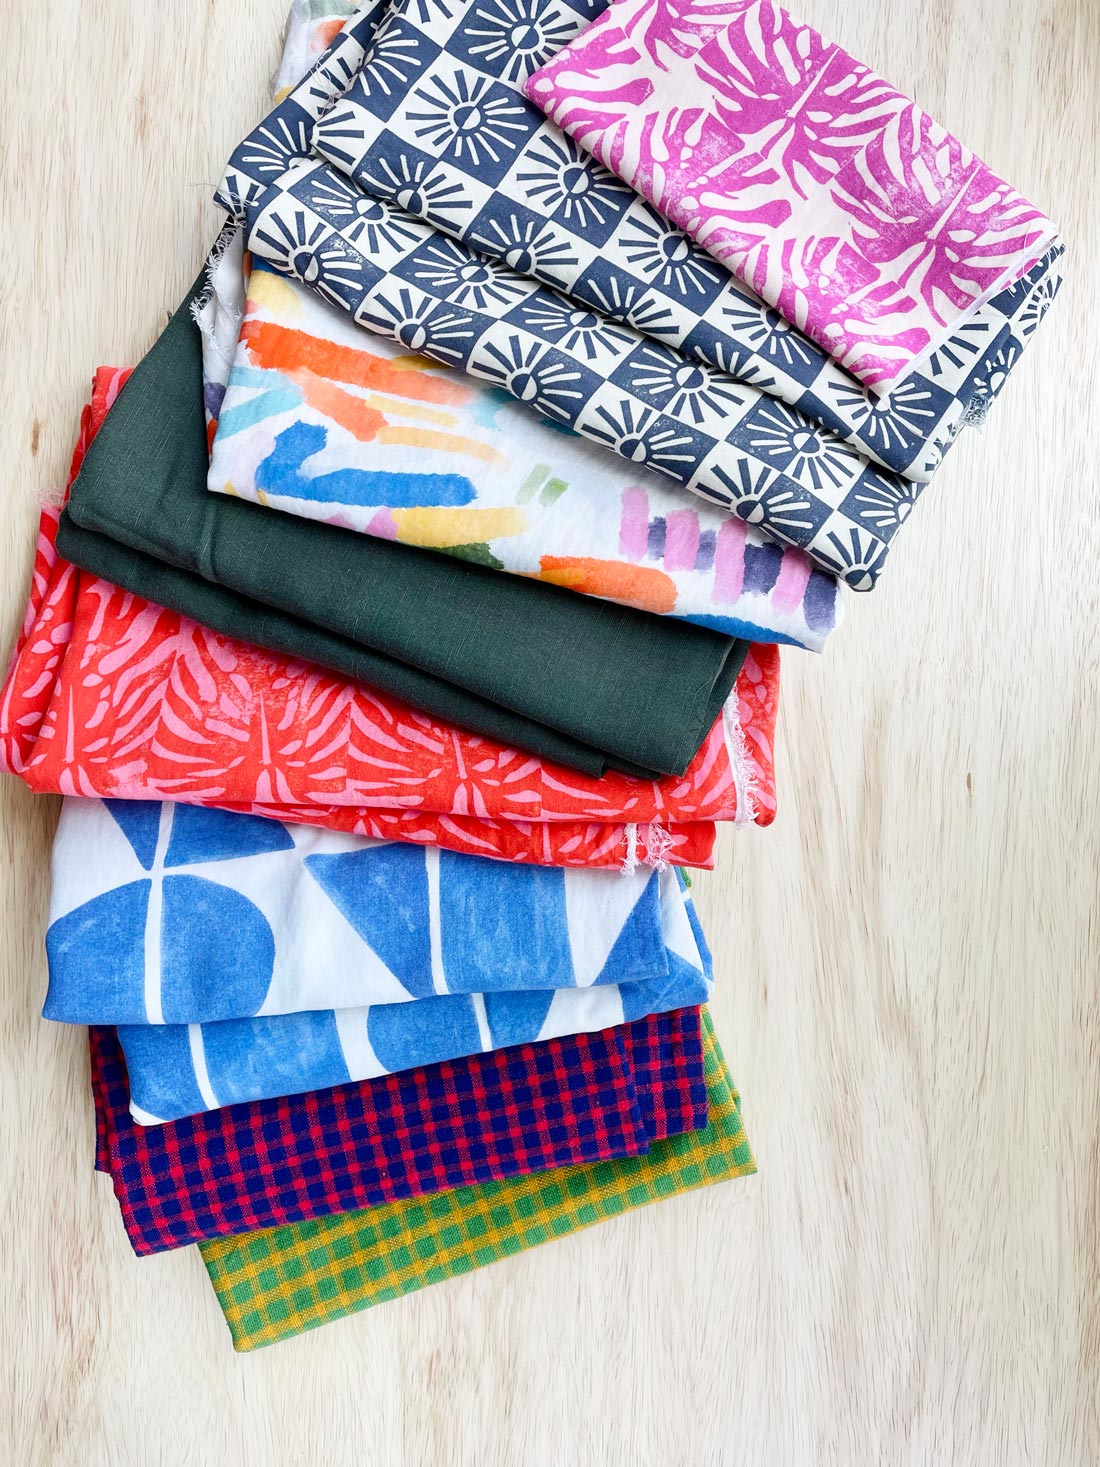 Swatches of fabrics from Slow Goods Studio.